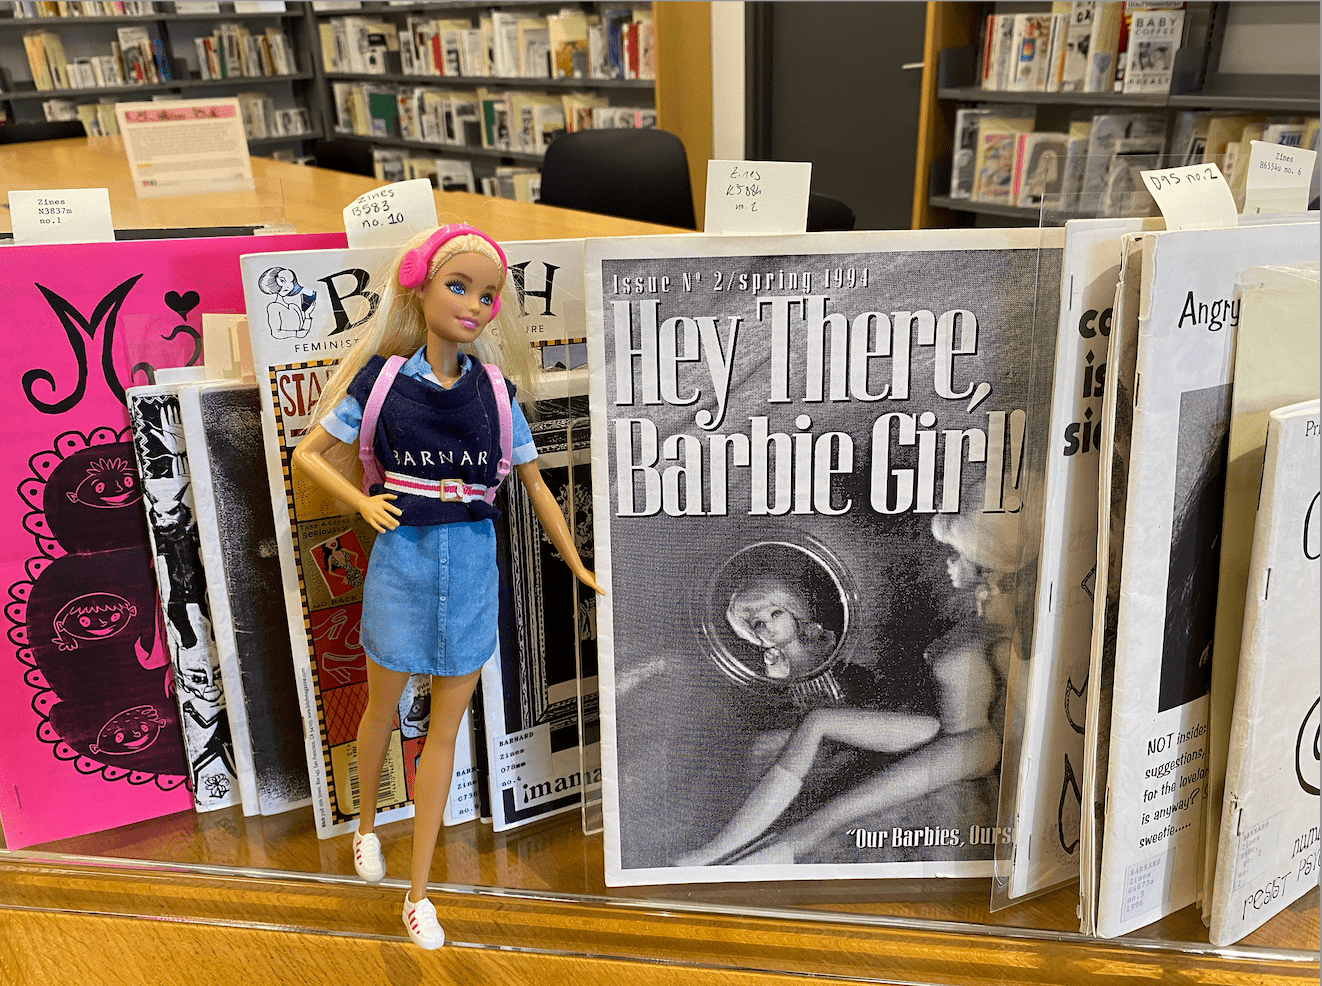 barnard barbie is reading 'Hey There, Barbie Girl'